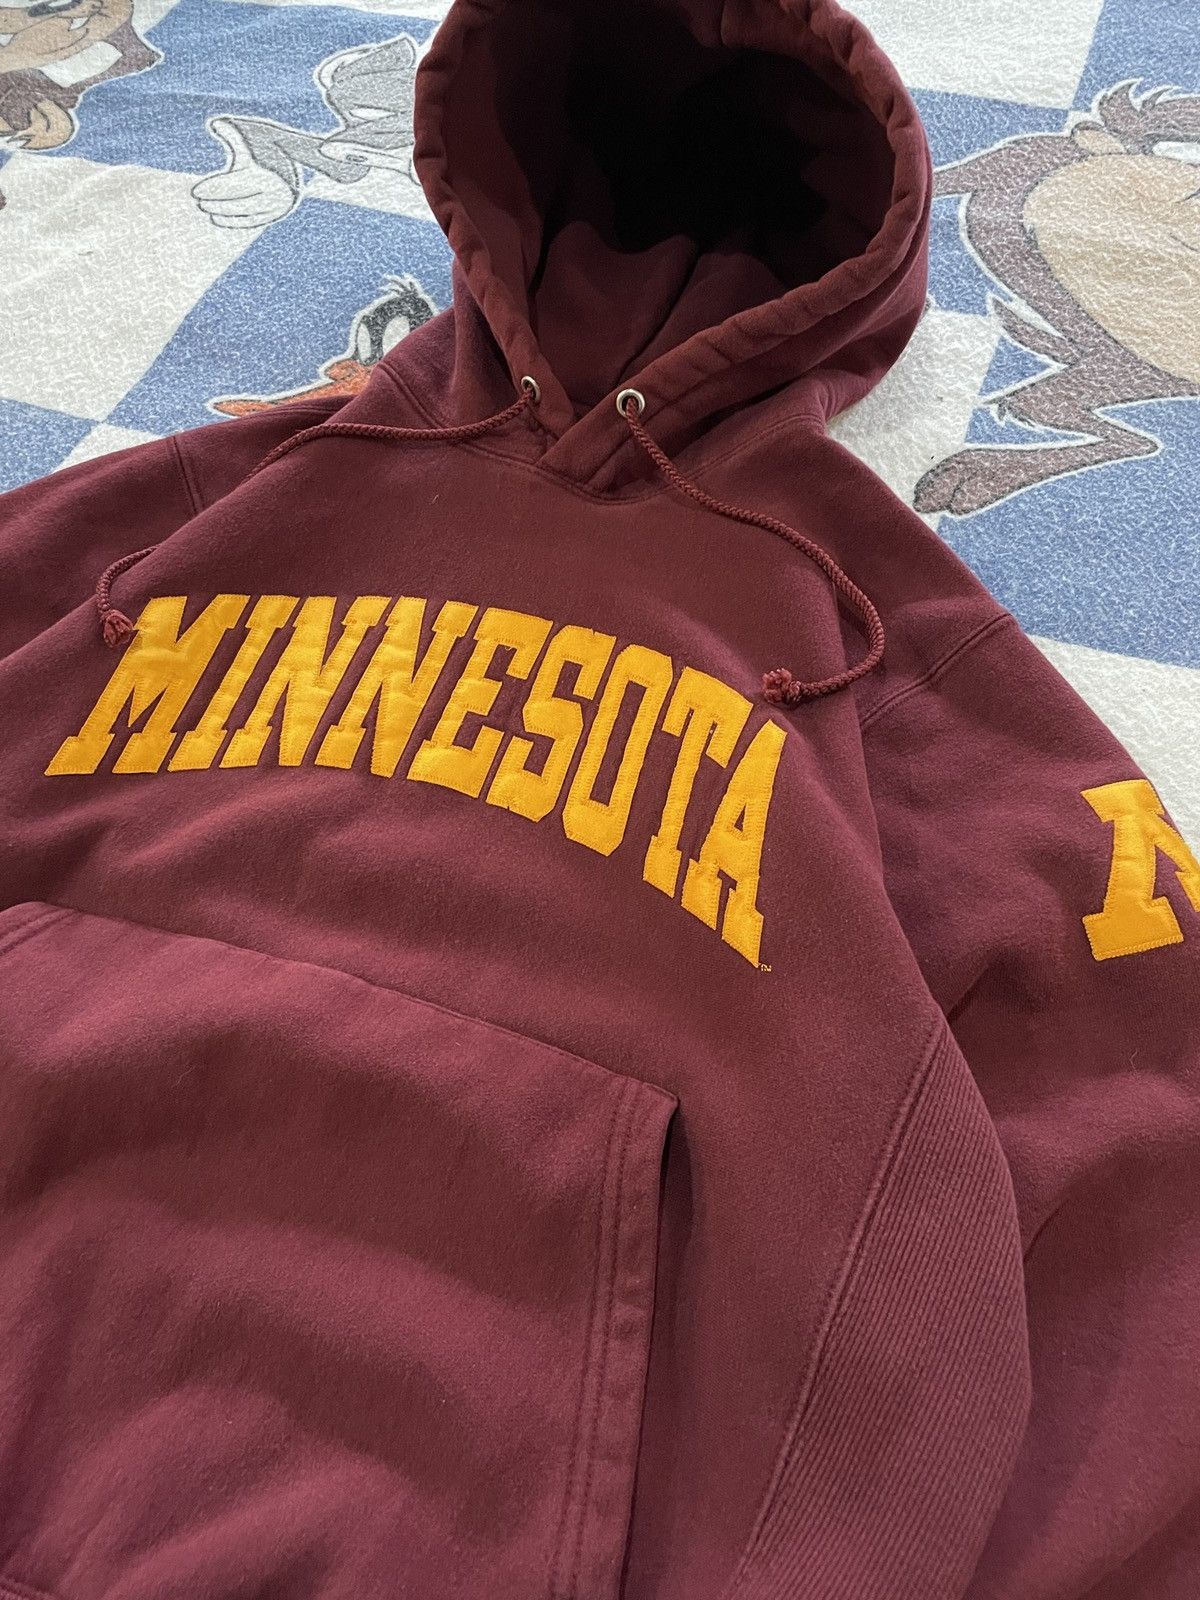 American College Minnesota gophers sweatshirt Size US S / EU 44-46 / 1 - 2 Preview